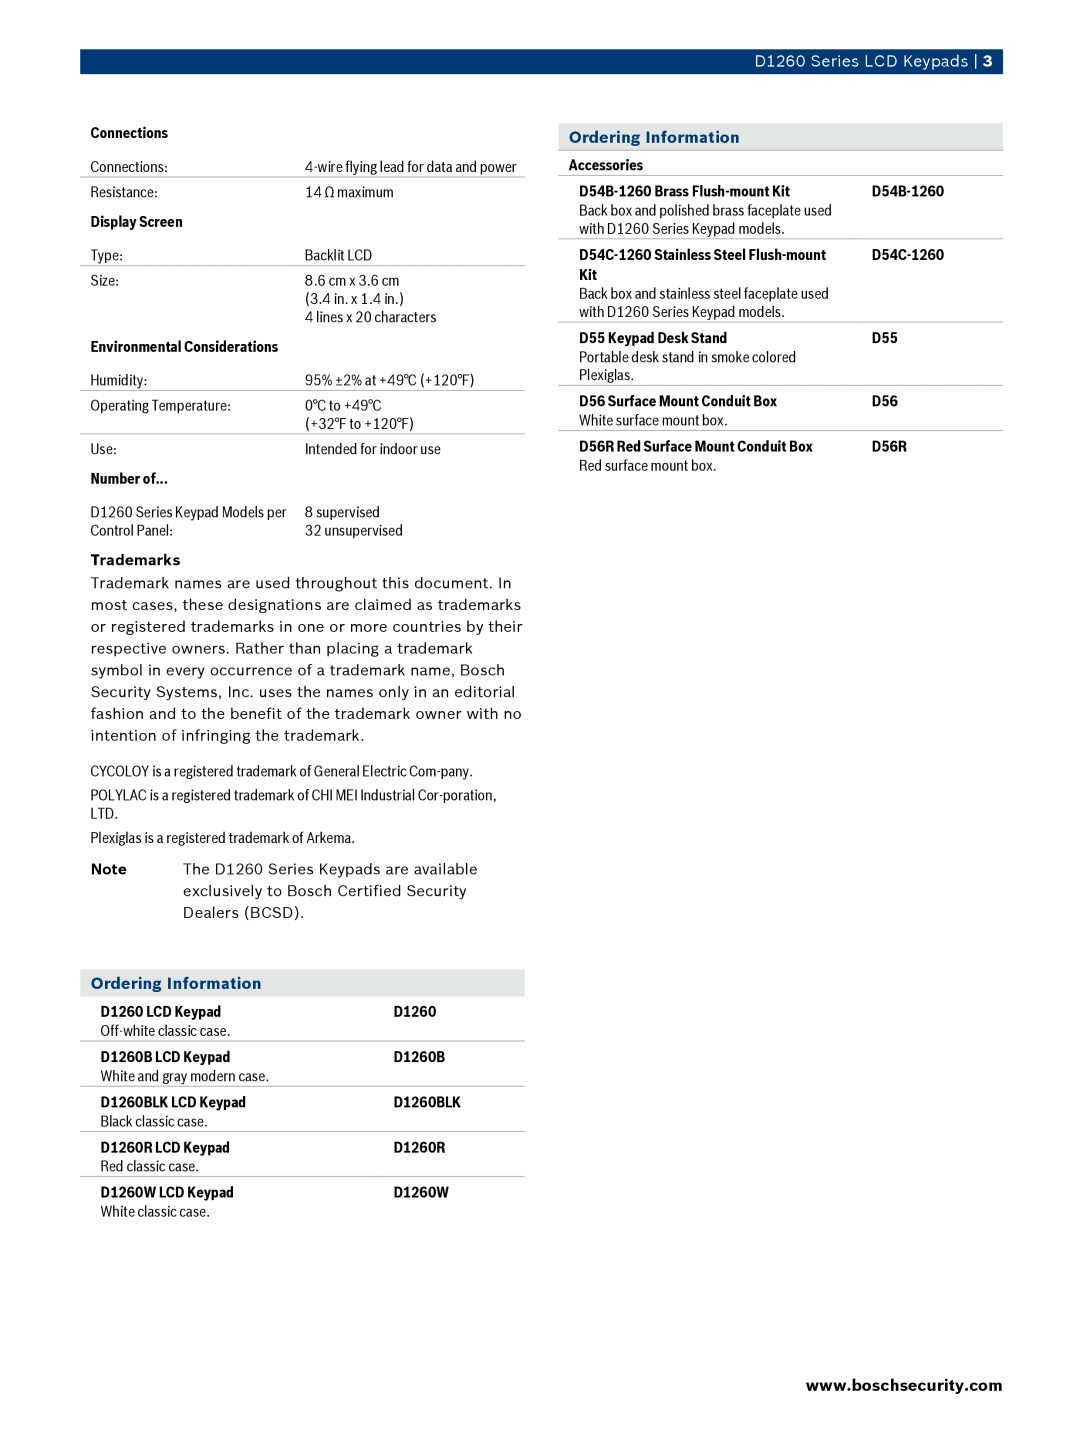 Bosch Appliances manual Ordering Information, D1260 Series LCD Keypads 